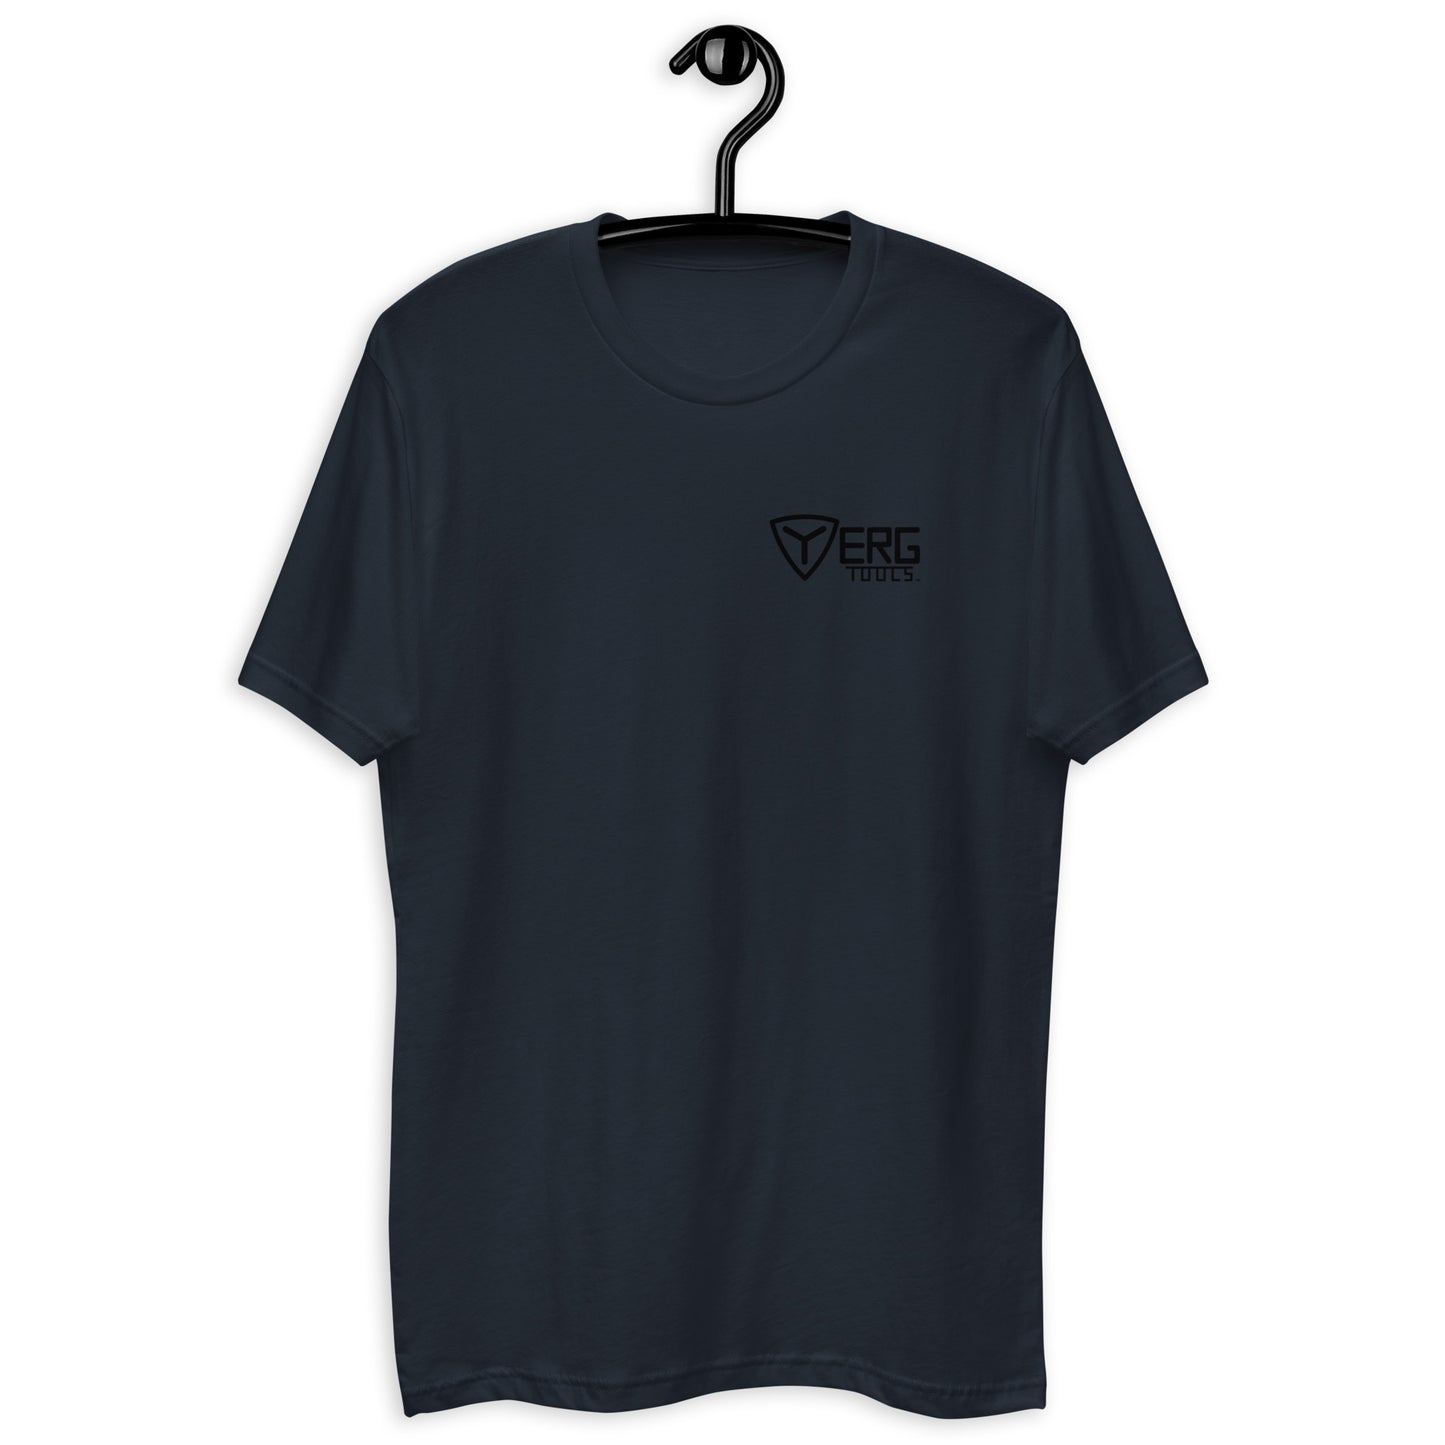 Yerg Tools Logo T-shirt